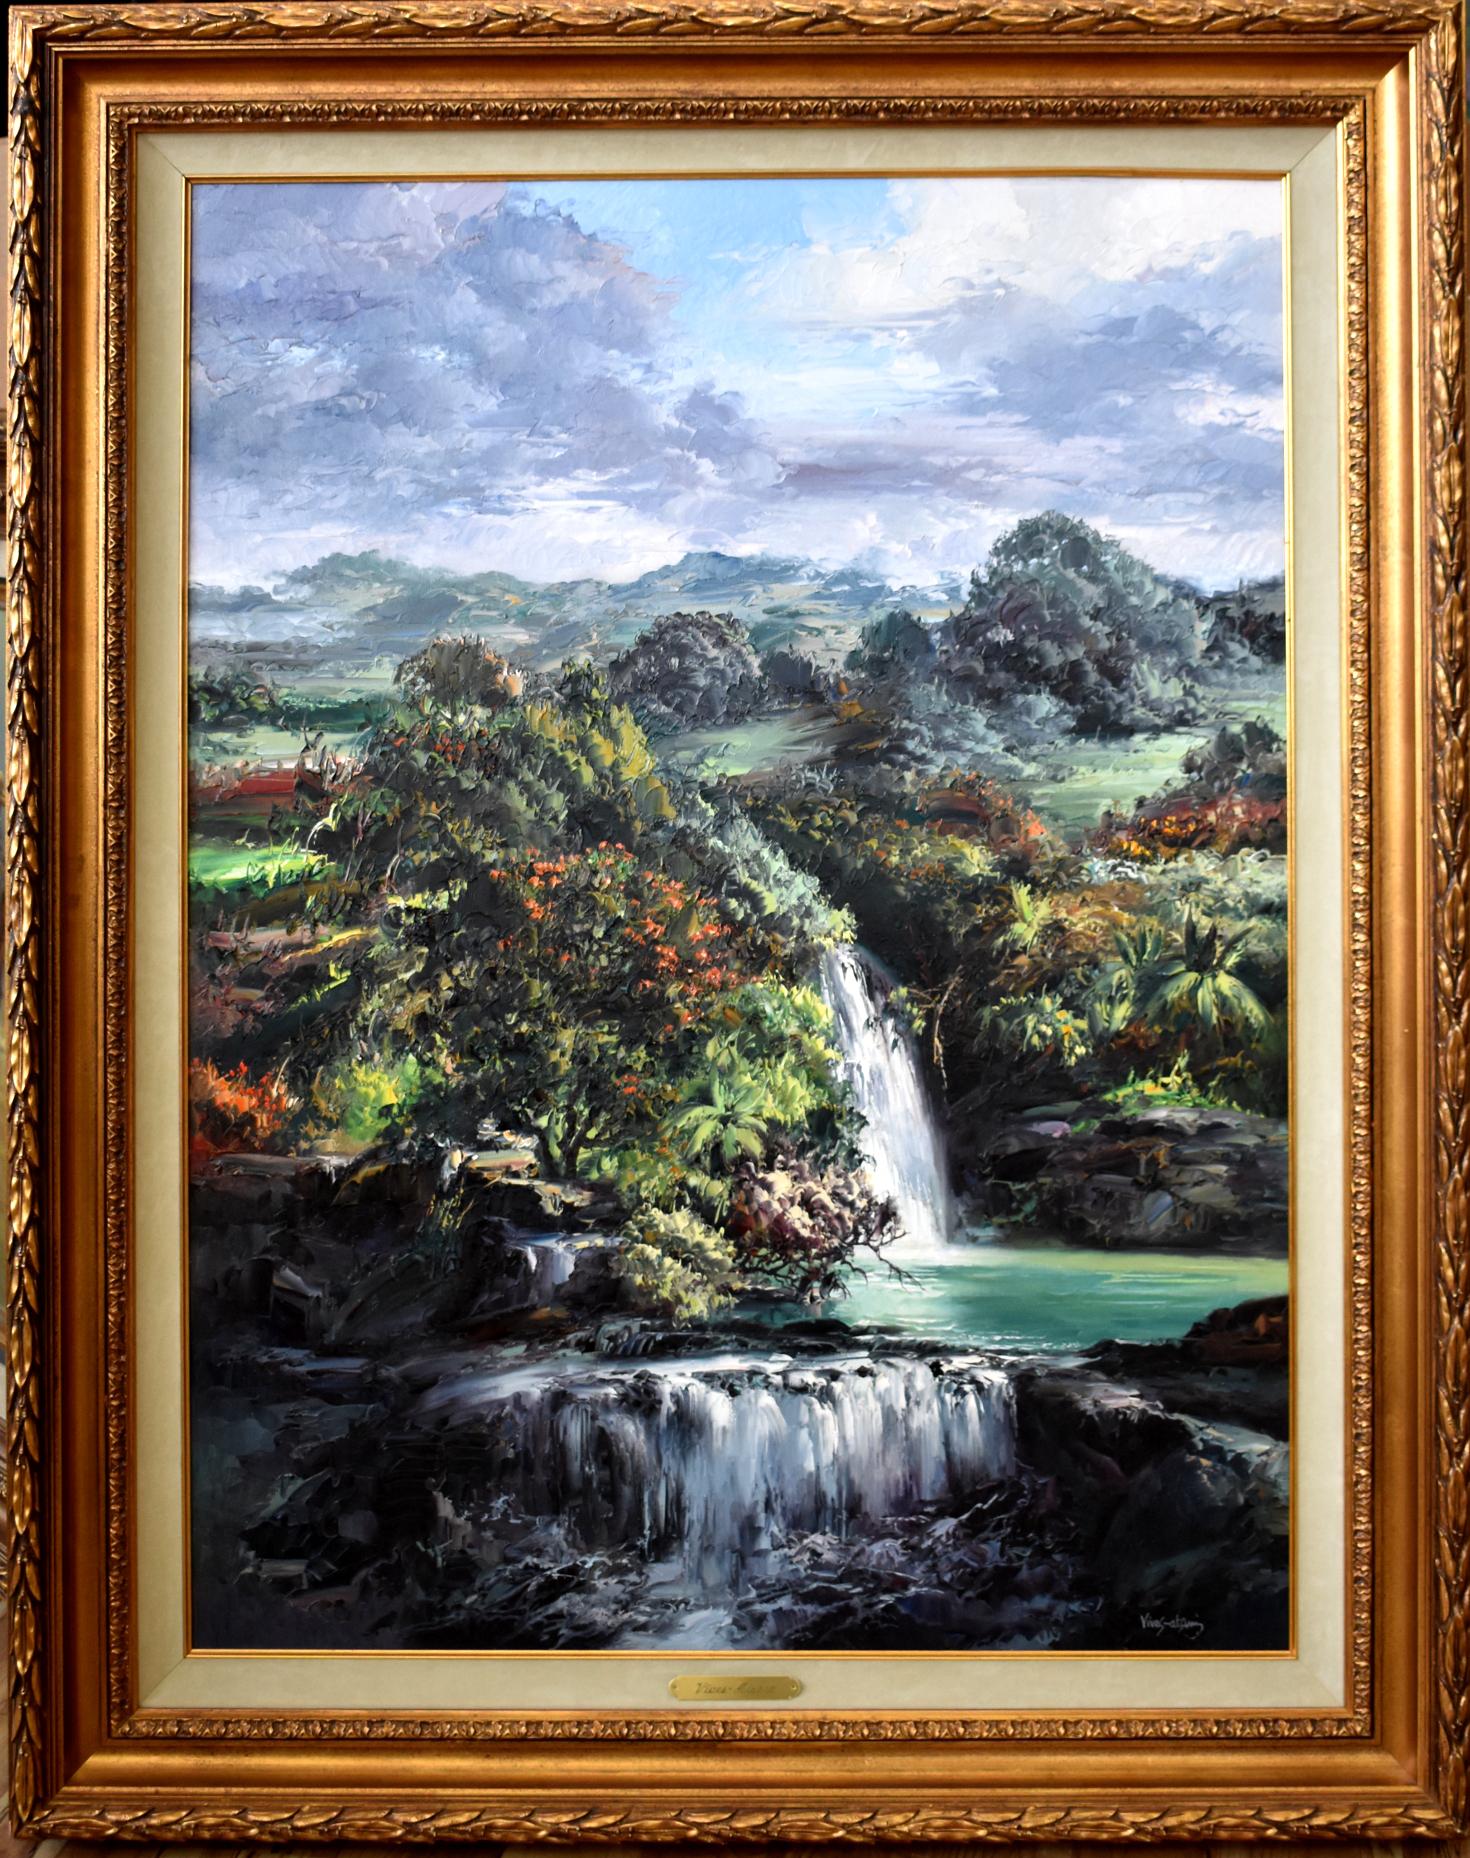 Jose Vives-Atsara Landscape Painting - "Waterfalls In The Island of Oahu Hawaii"  Texas Palette Knife Artist